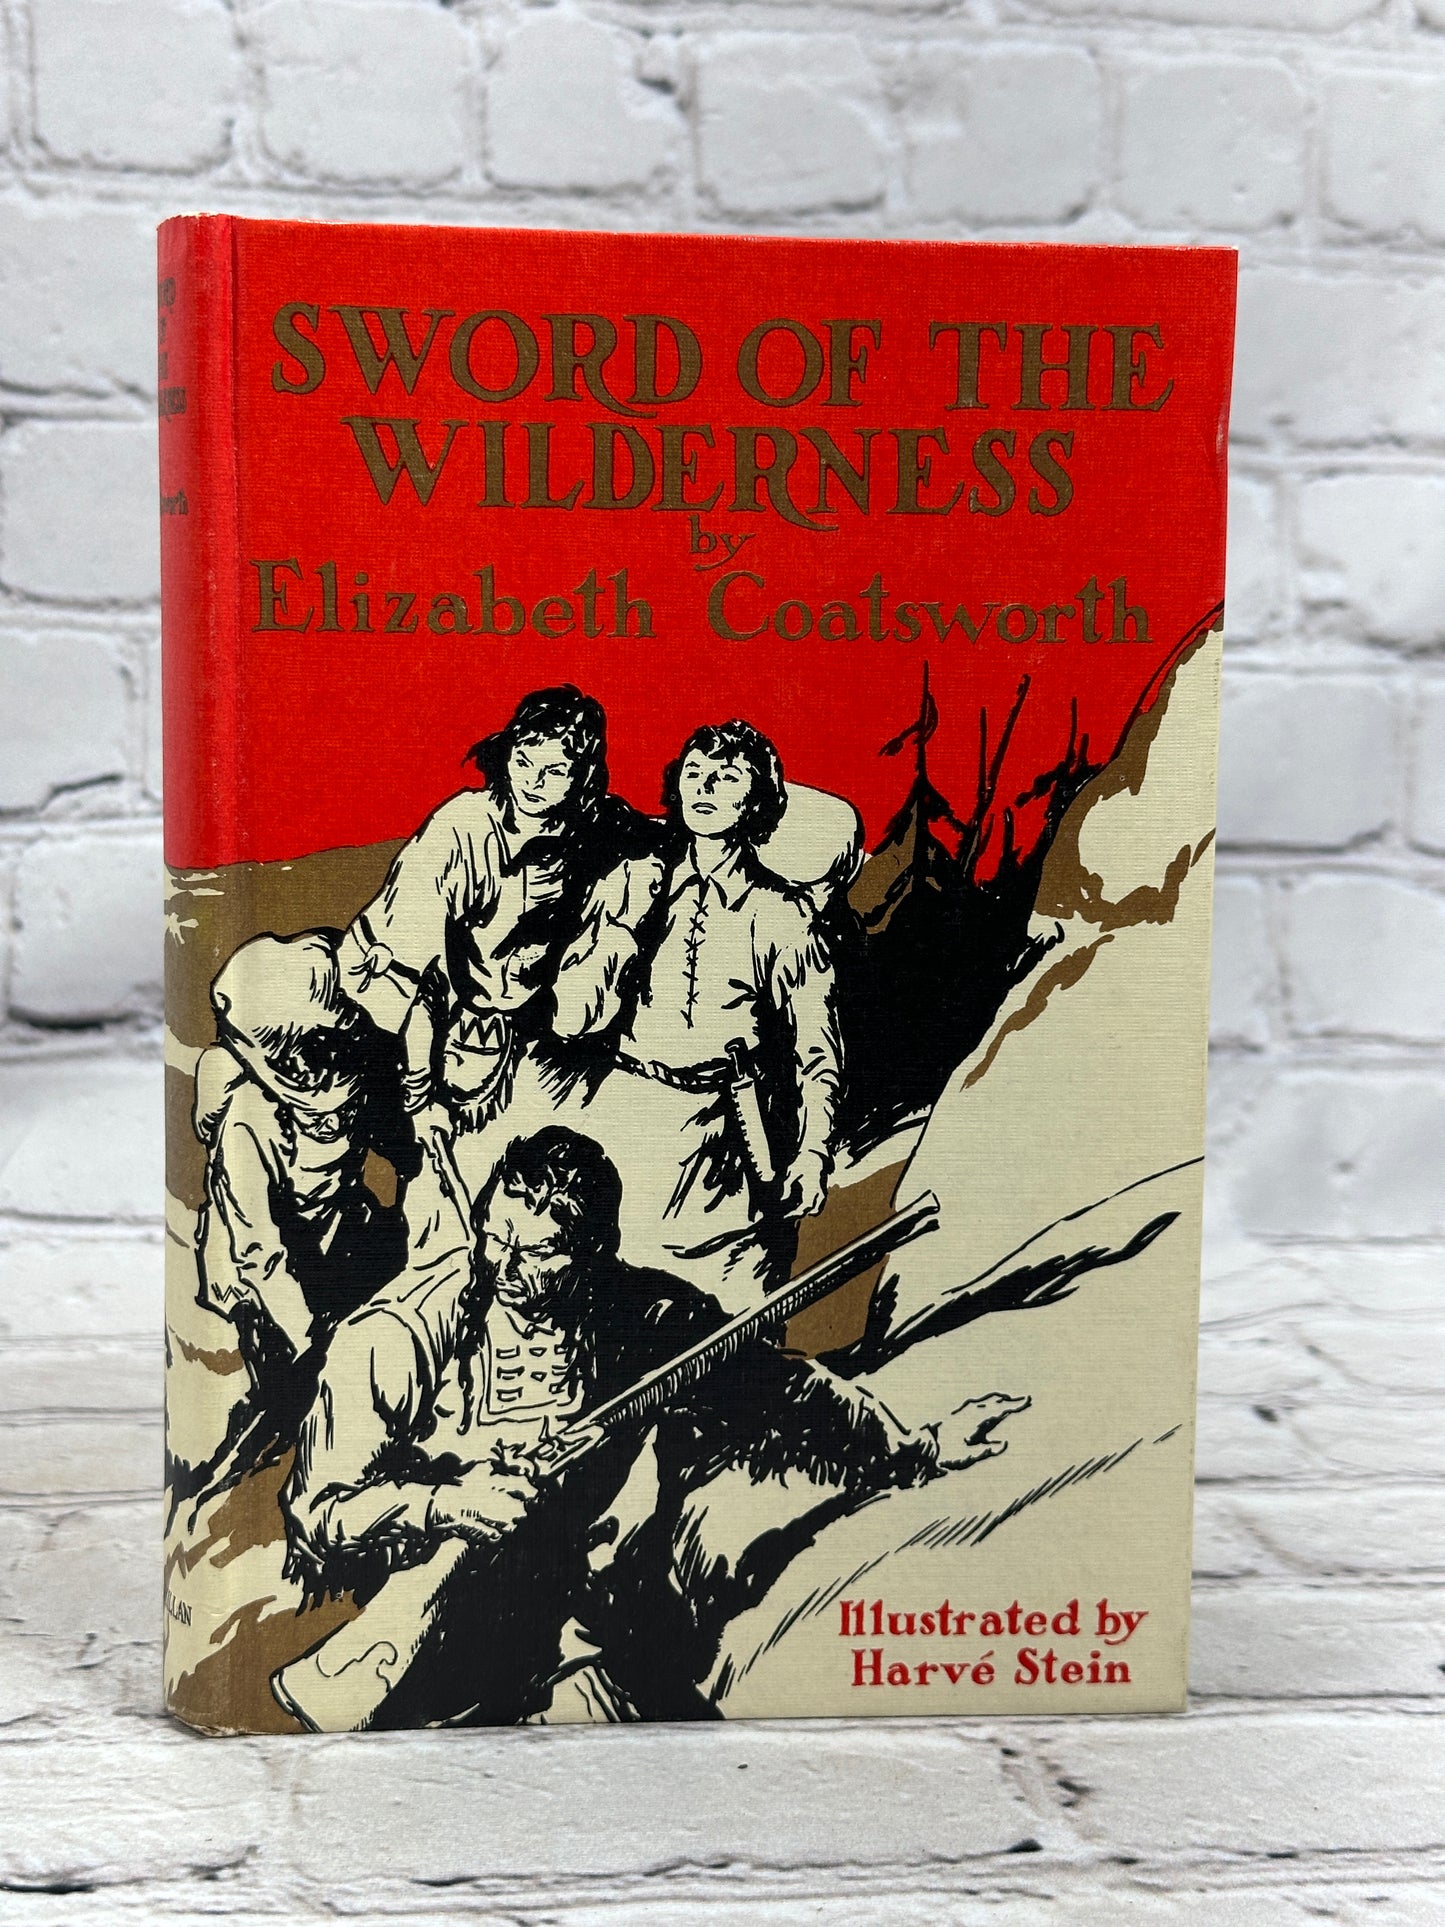 Sword of the Wilderness by Elizabeth Coatsworth [1936]